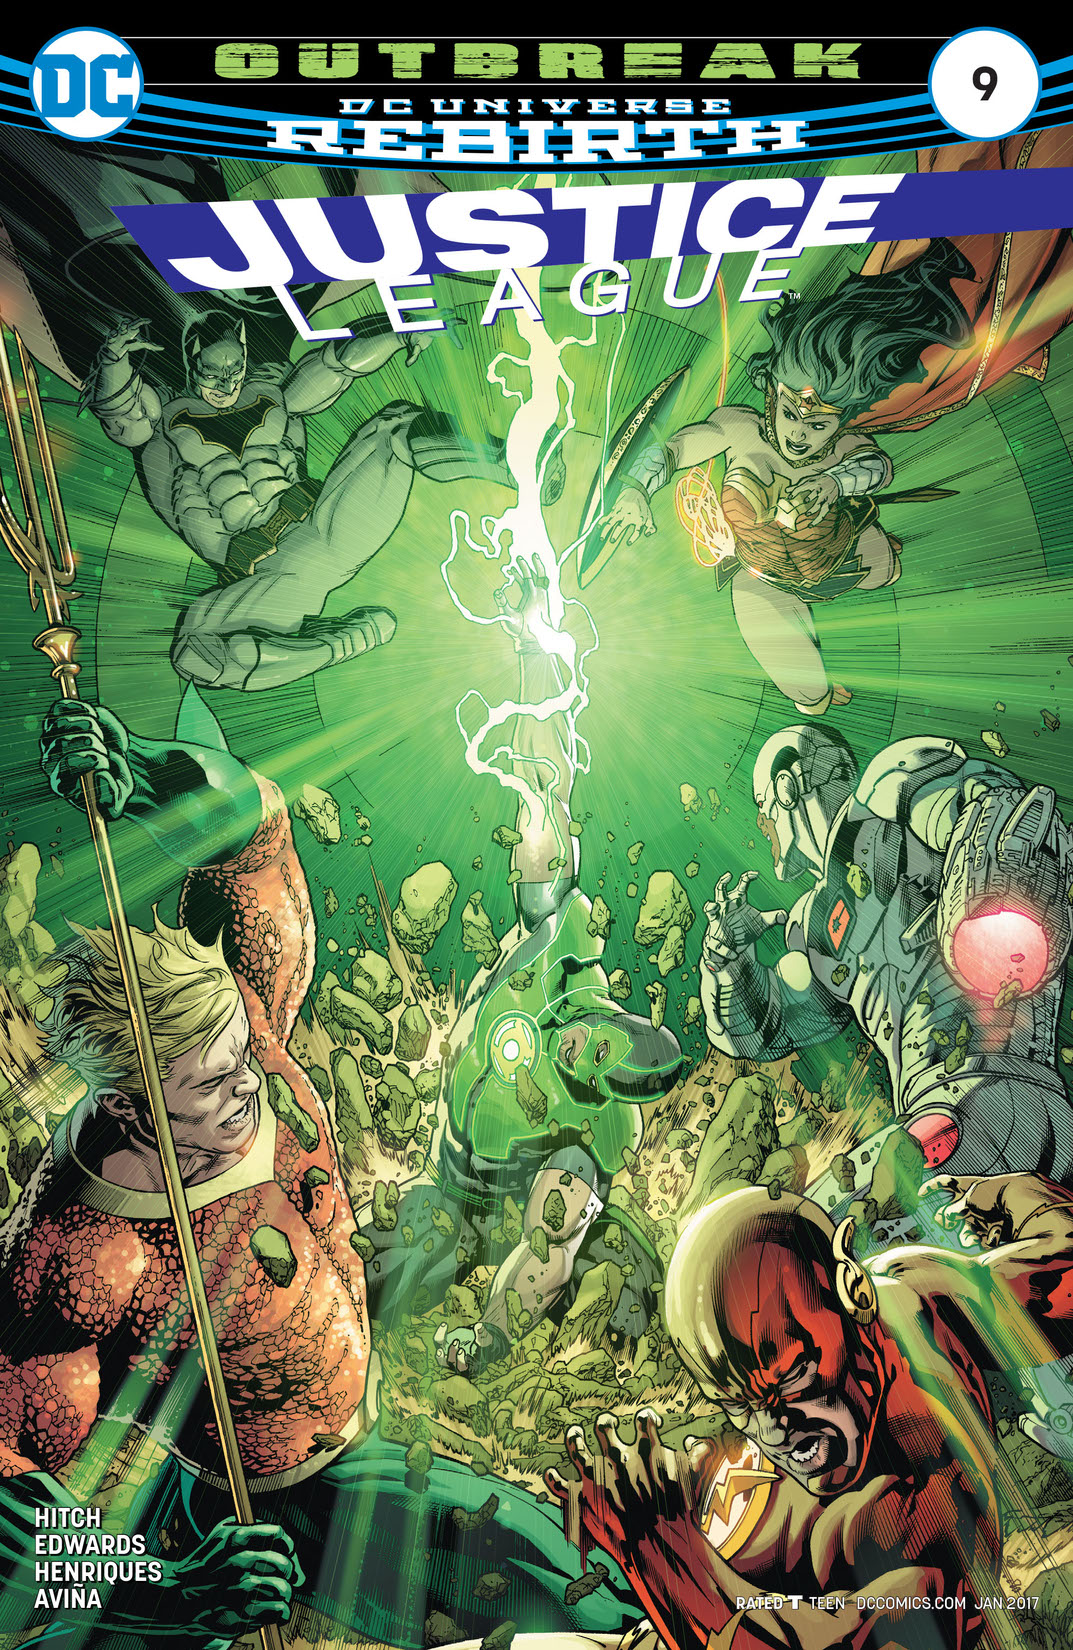 Justice League (2016-) #9 preview images